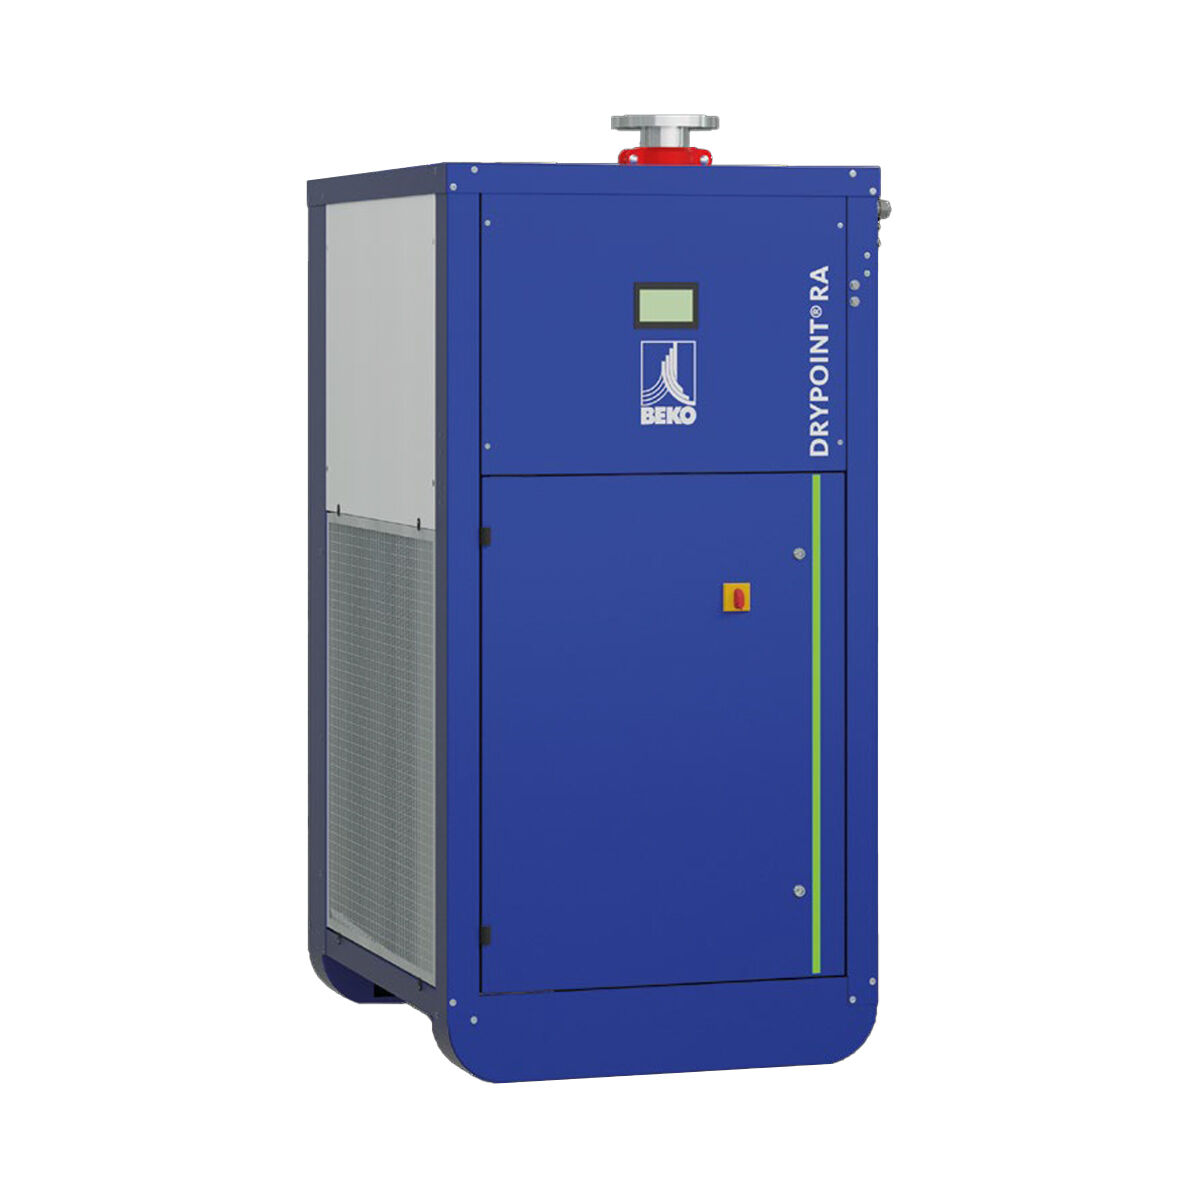 BEKO DRYPOINT RA III 110/AC essiccatore a refrigerazione ad aria compressa con Bekomat, raffreddato ad aria